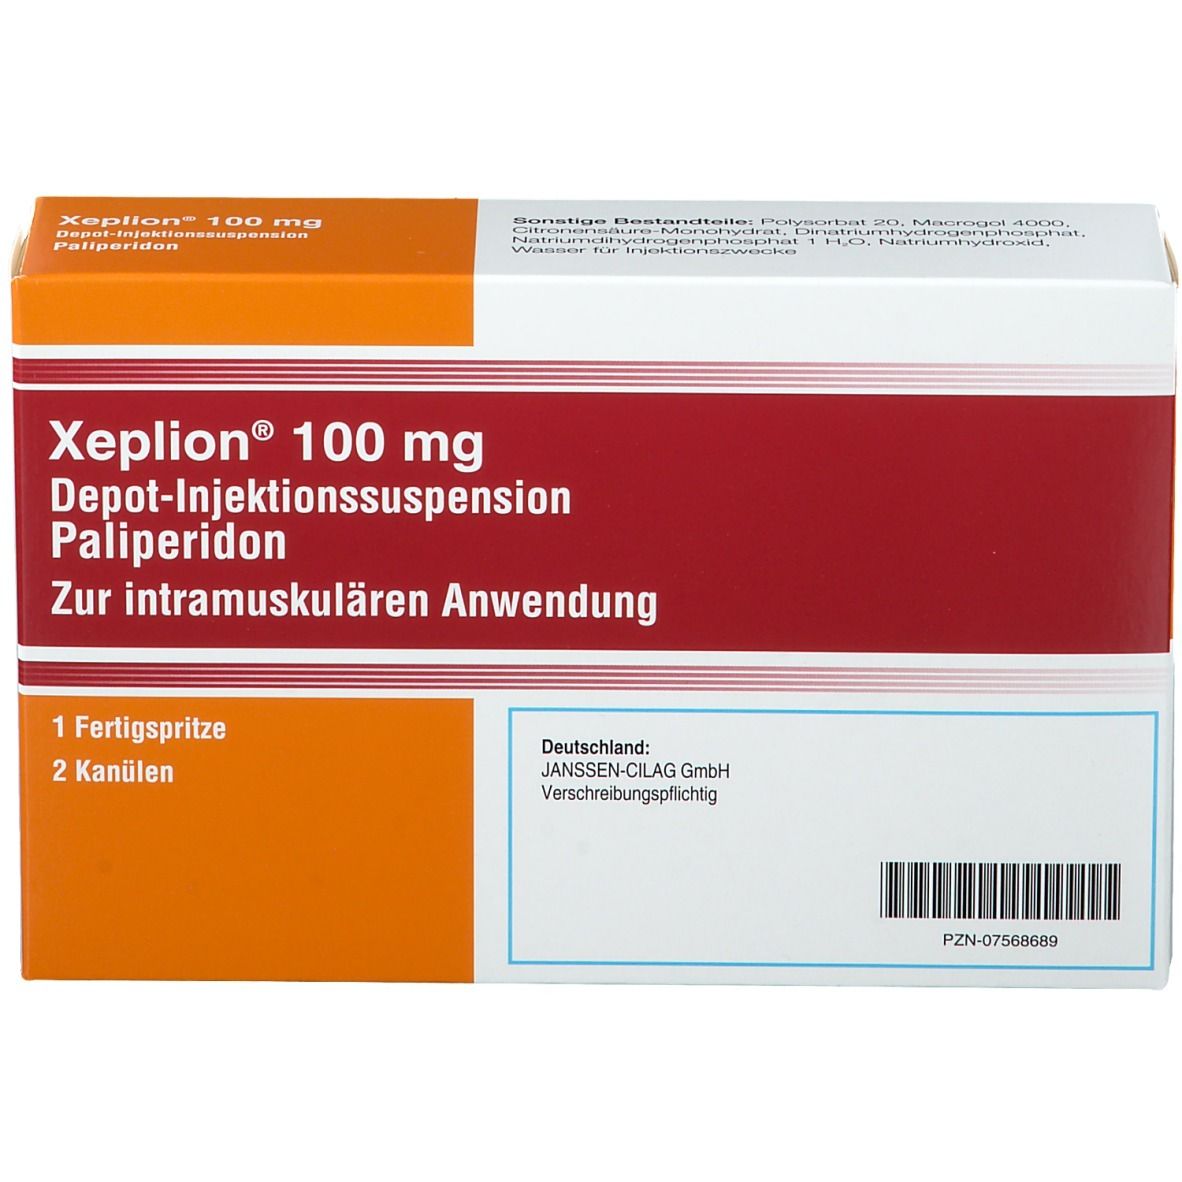 Xeplion® 100 mg